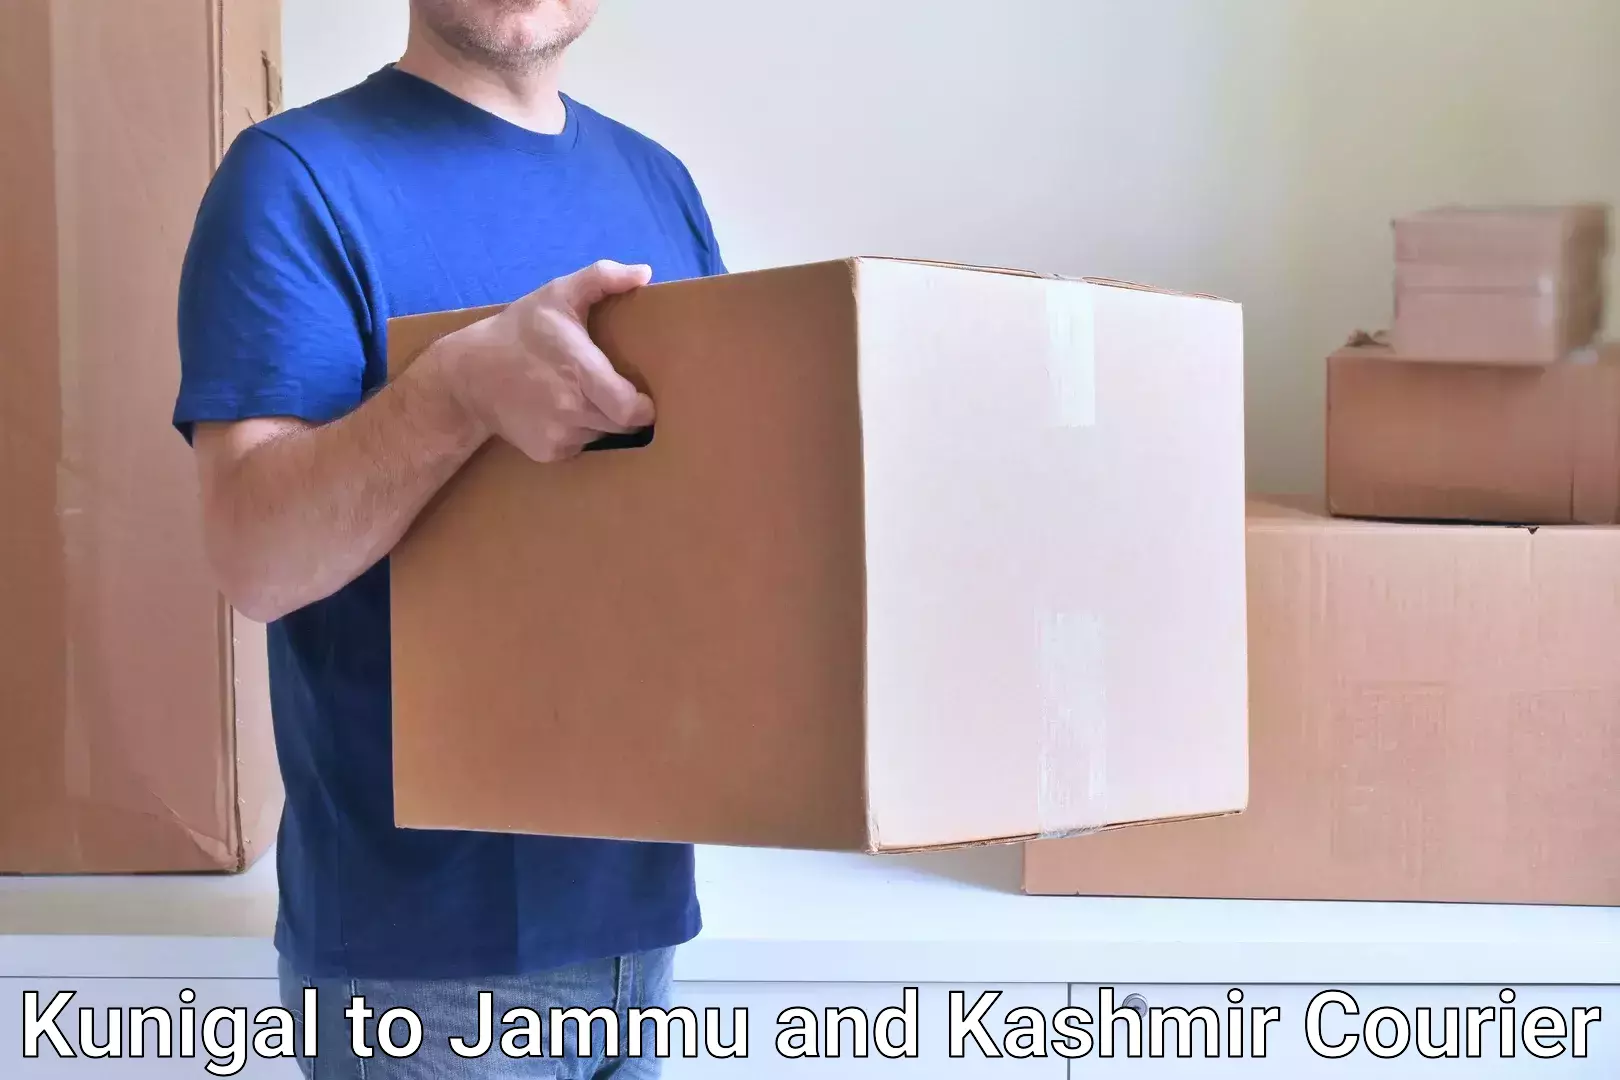 Quick dispatch service Kunigal to University of Jammu